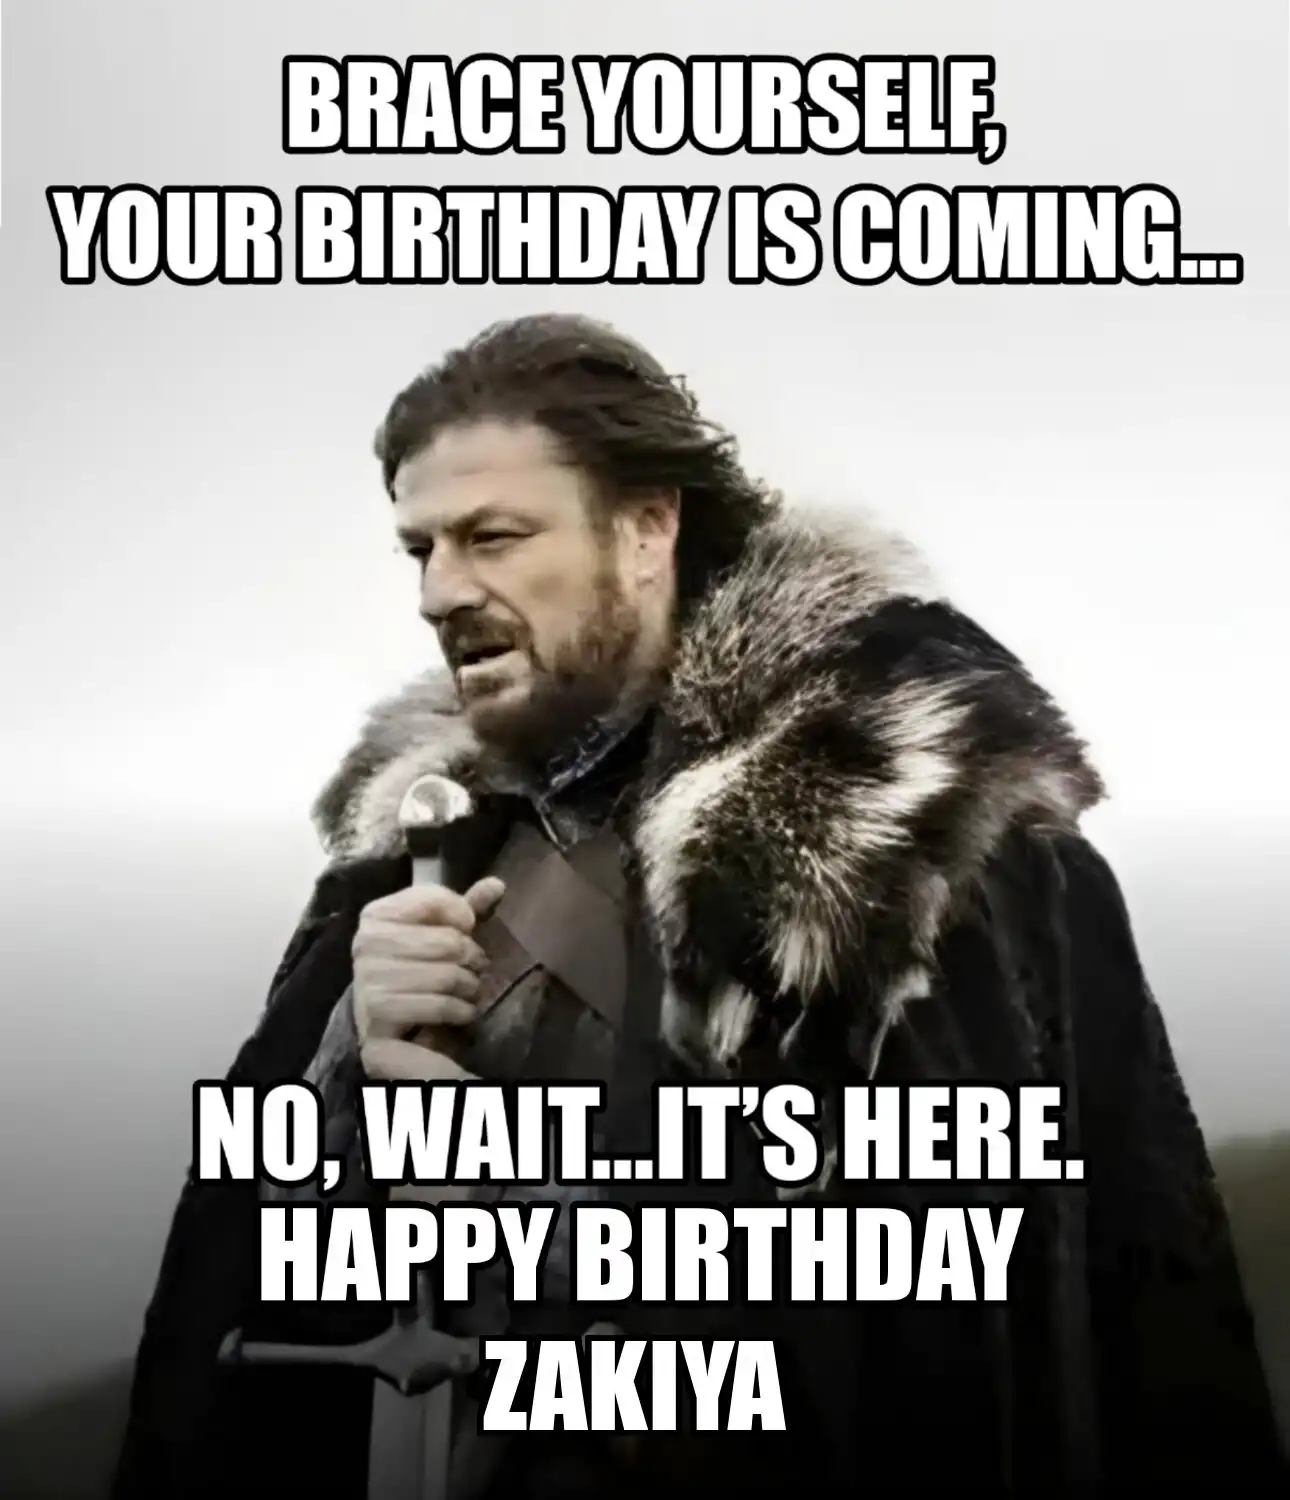 Happy Birthday Zakiya Brace Yourself Your Birthday Is Coming Meme